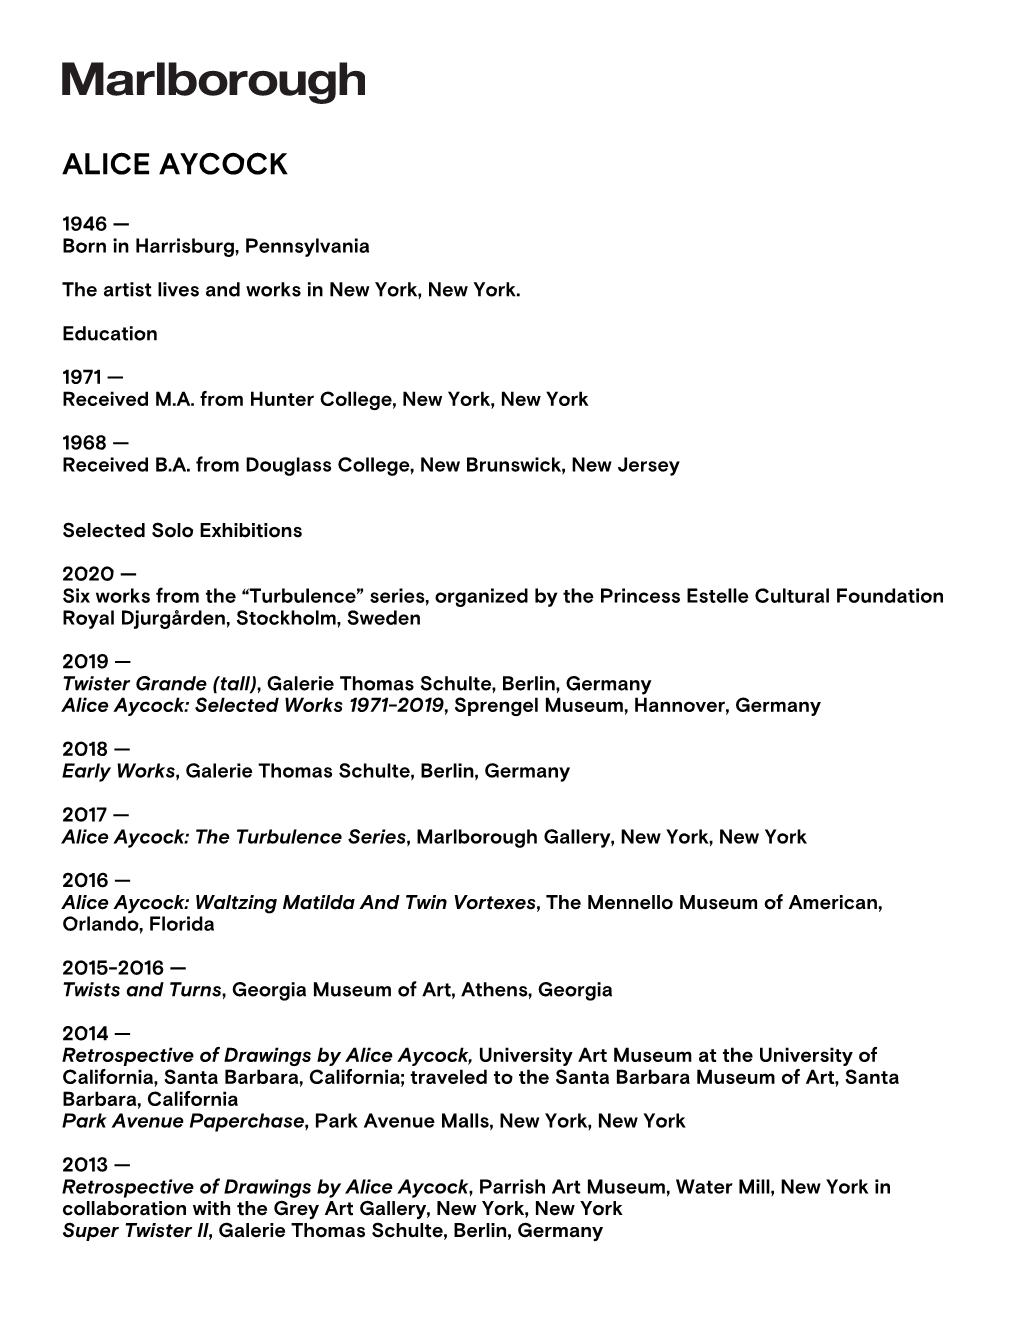 Alice Aycock